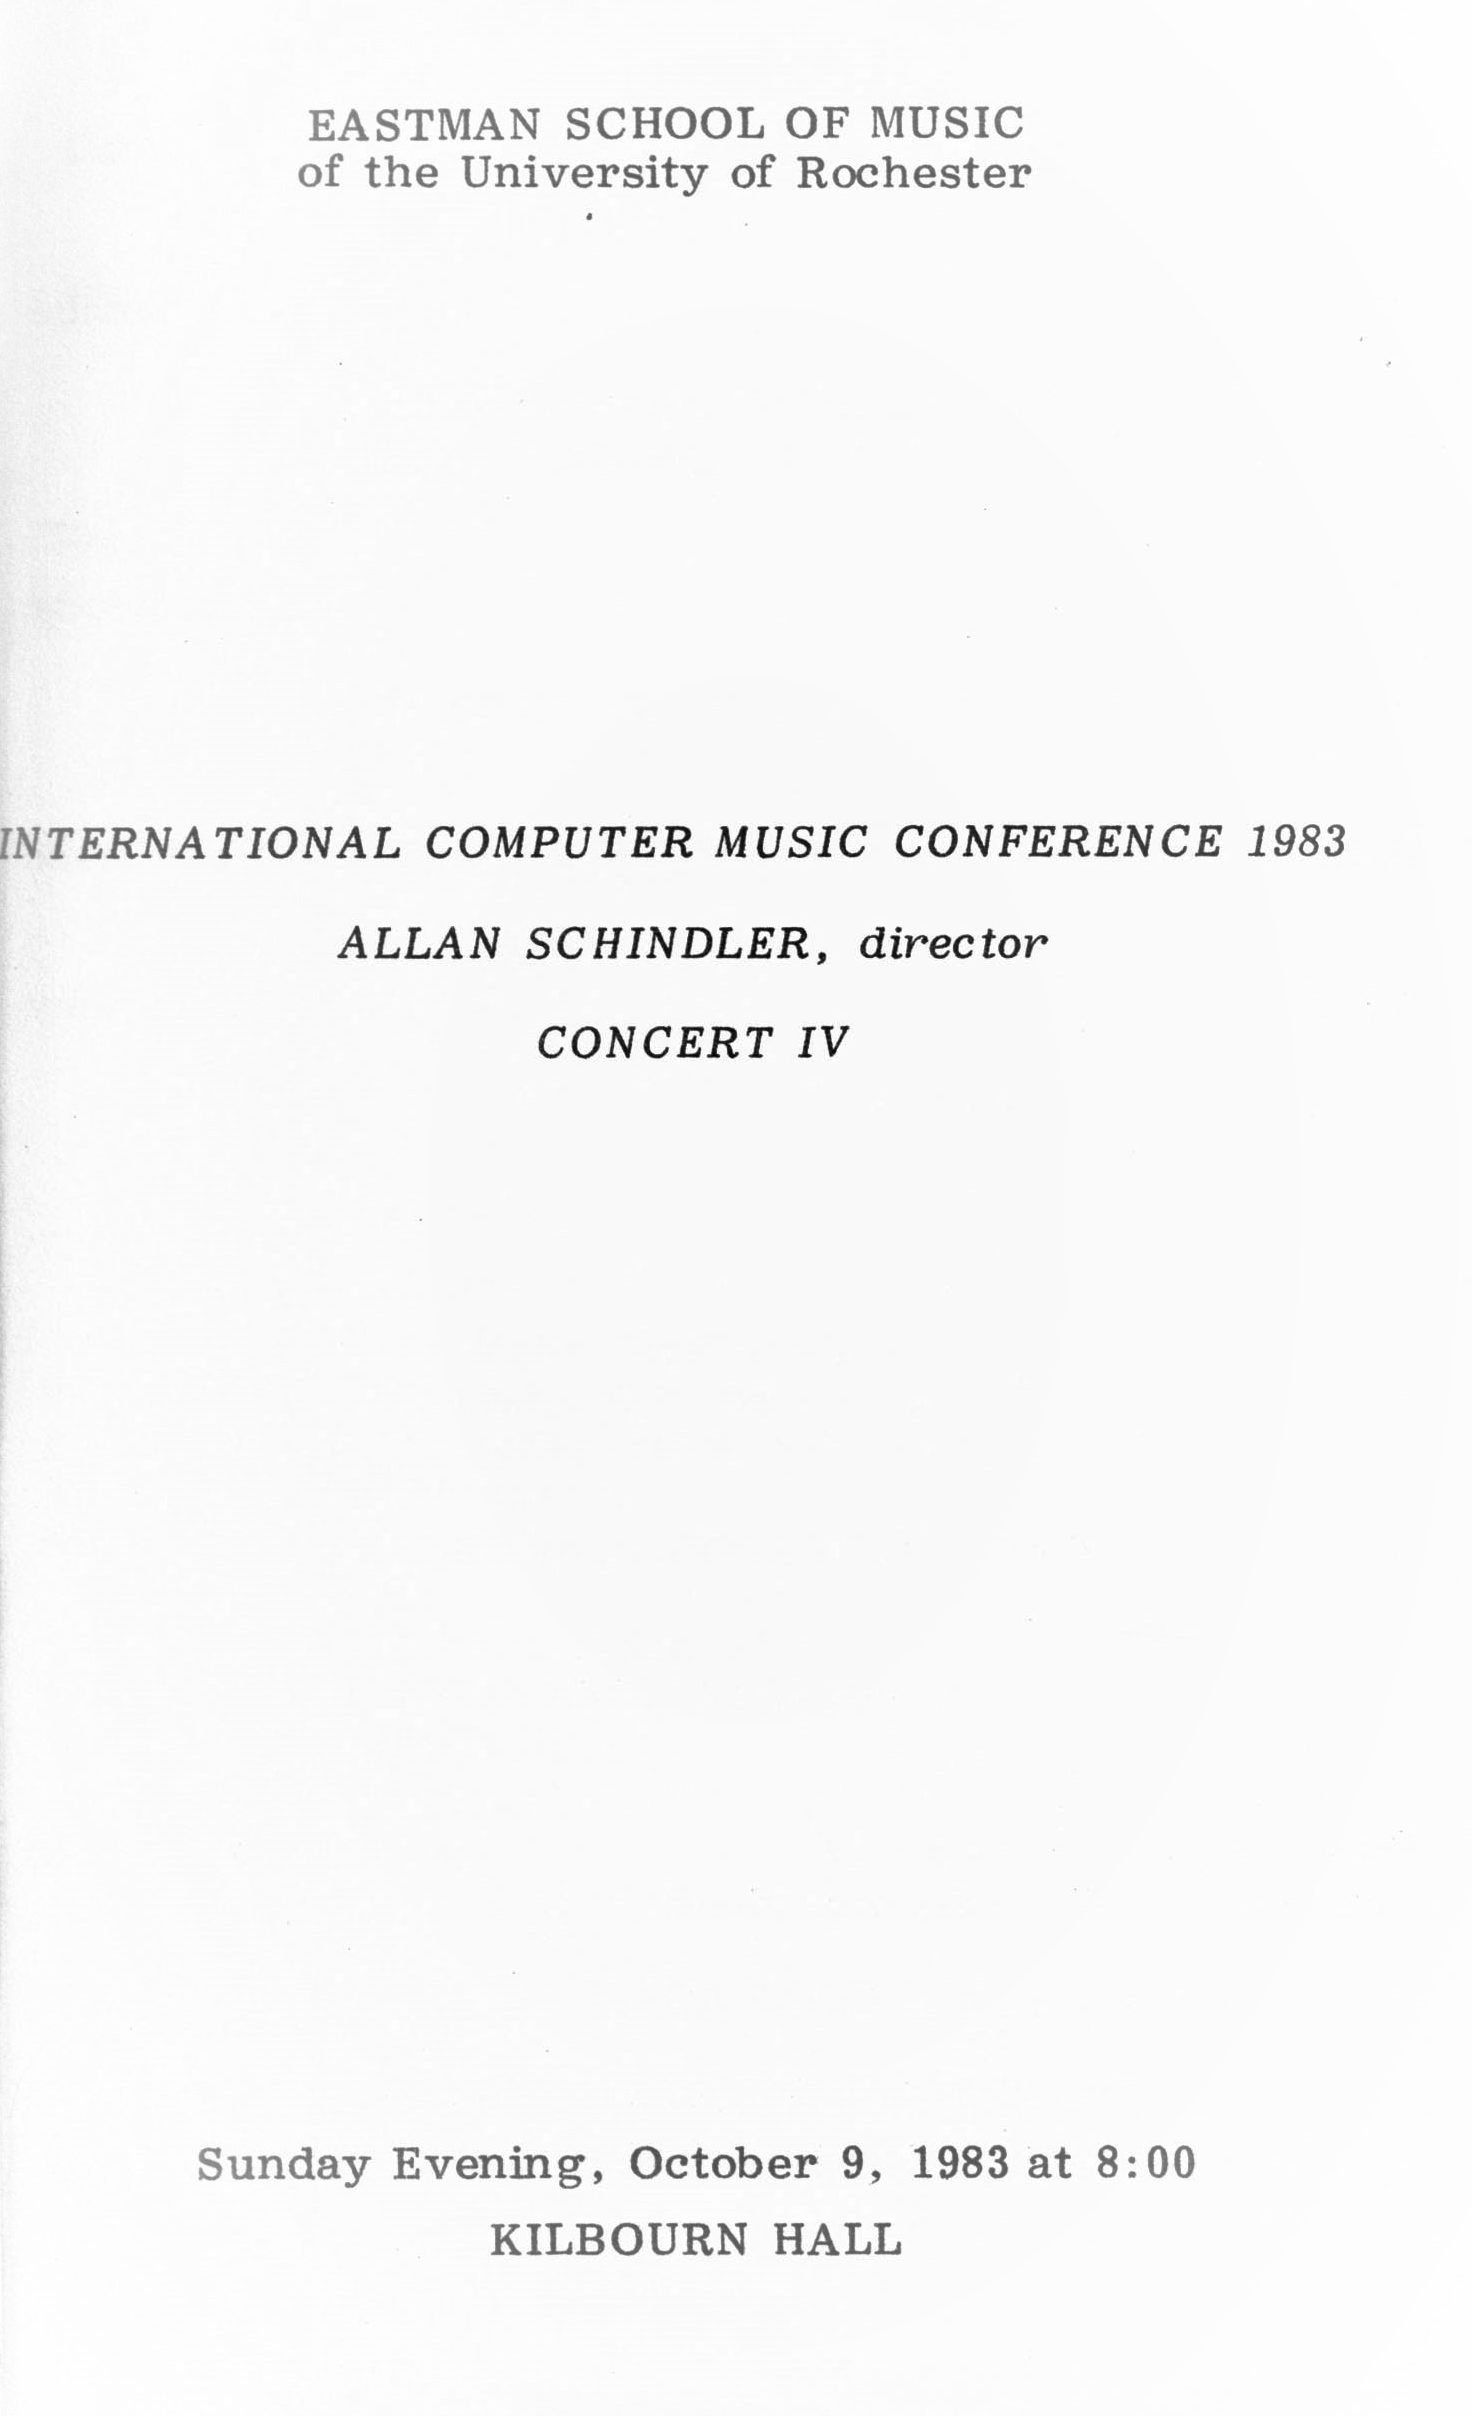 1983 ICMC Concert IV program, page 01